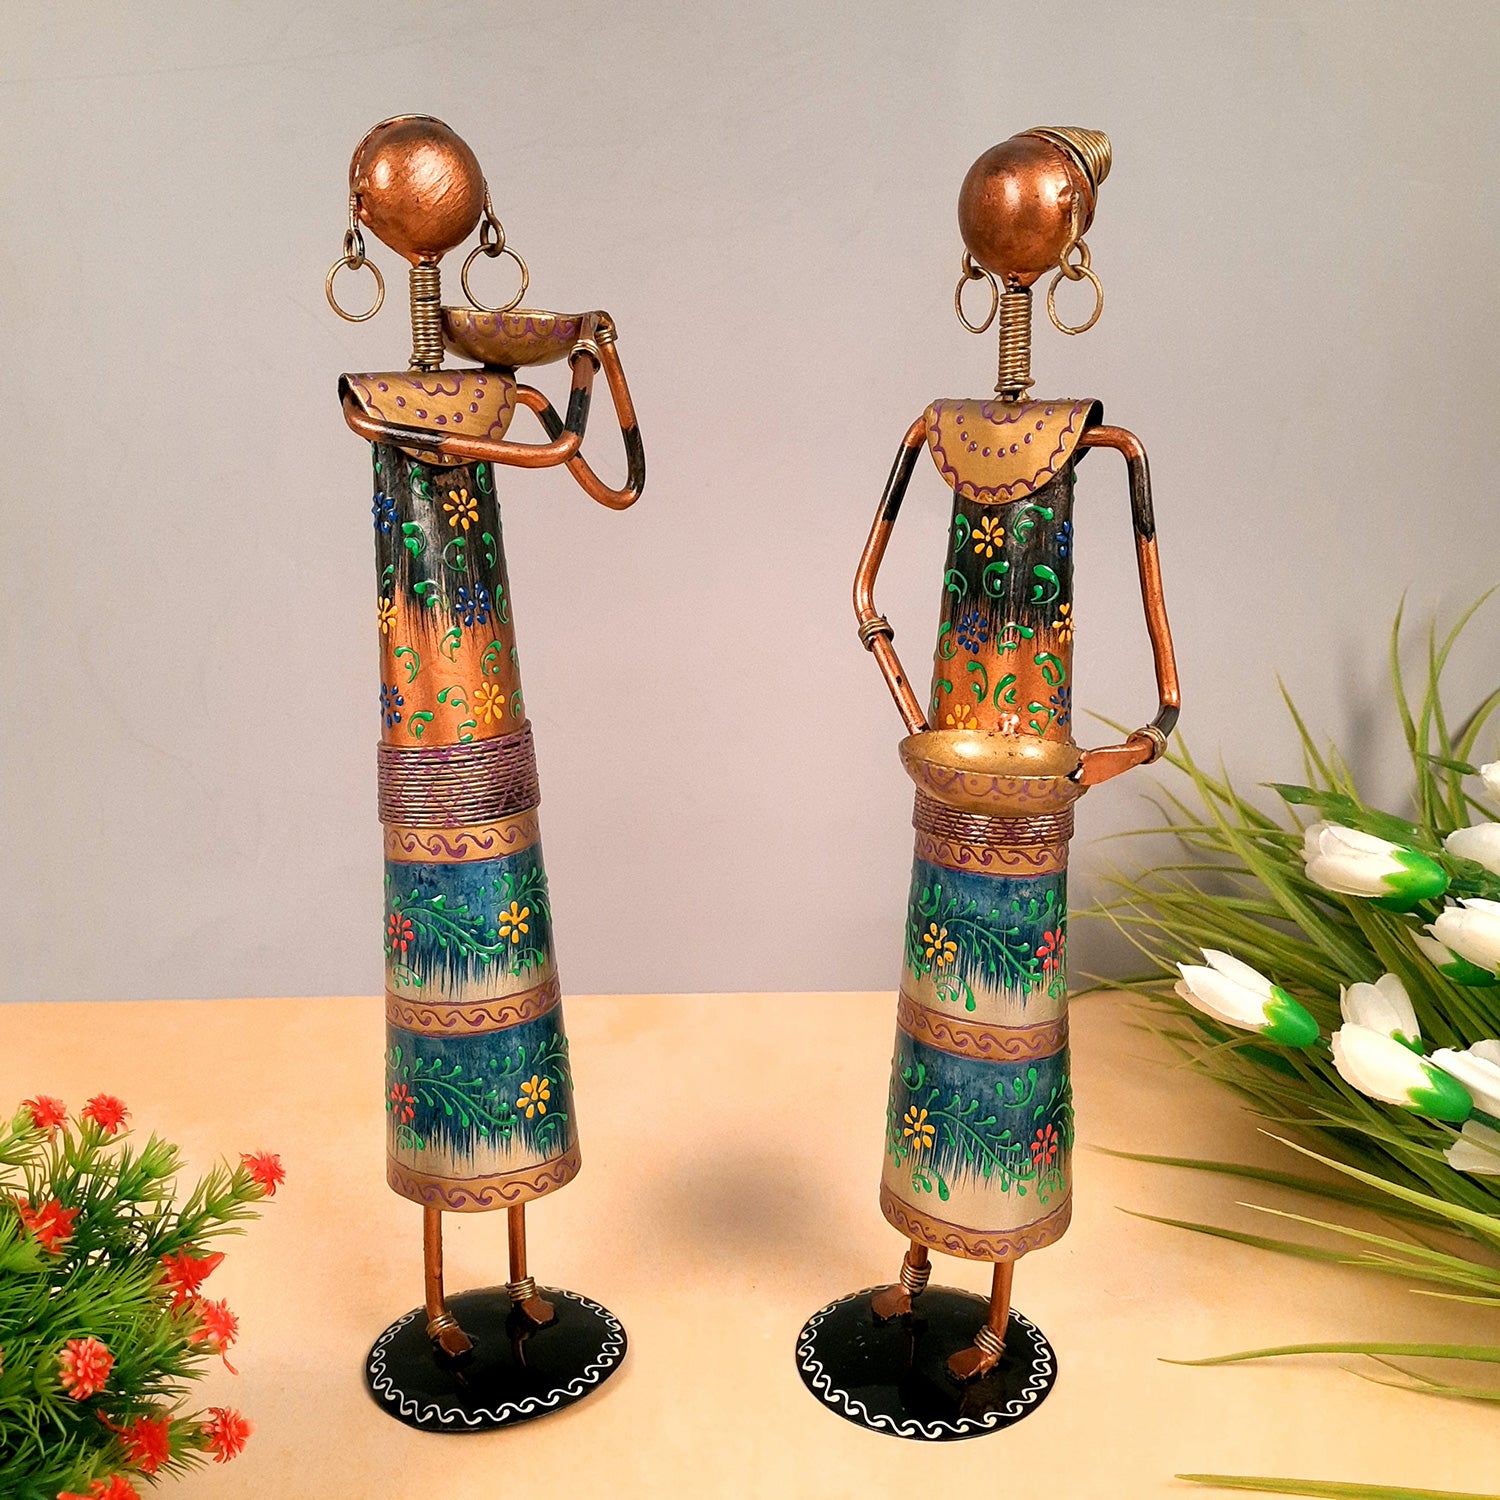 Showpiece Figurines Cum Tea Light Holders - Tribal Worker Design | Decorative Showpieces - for Home, Bedroom, Living Room, Office Desk, Table Decor & Gifts - 15 Inch (Set of 2) - Apkamart